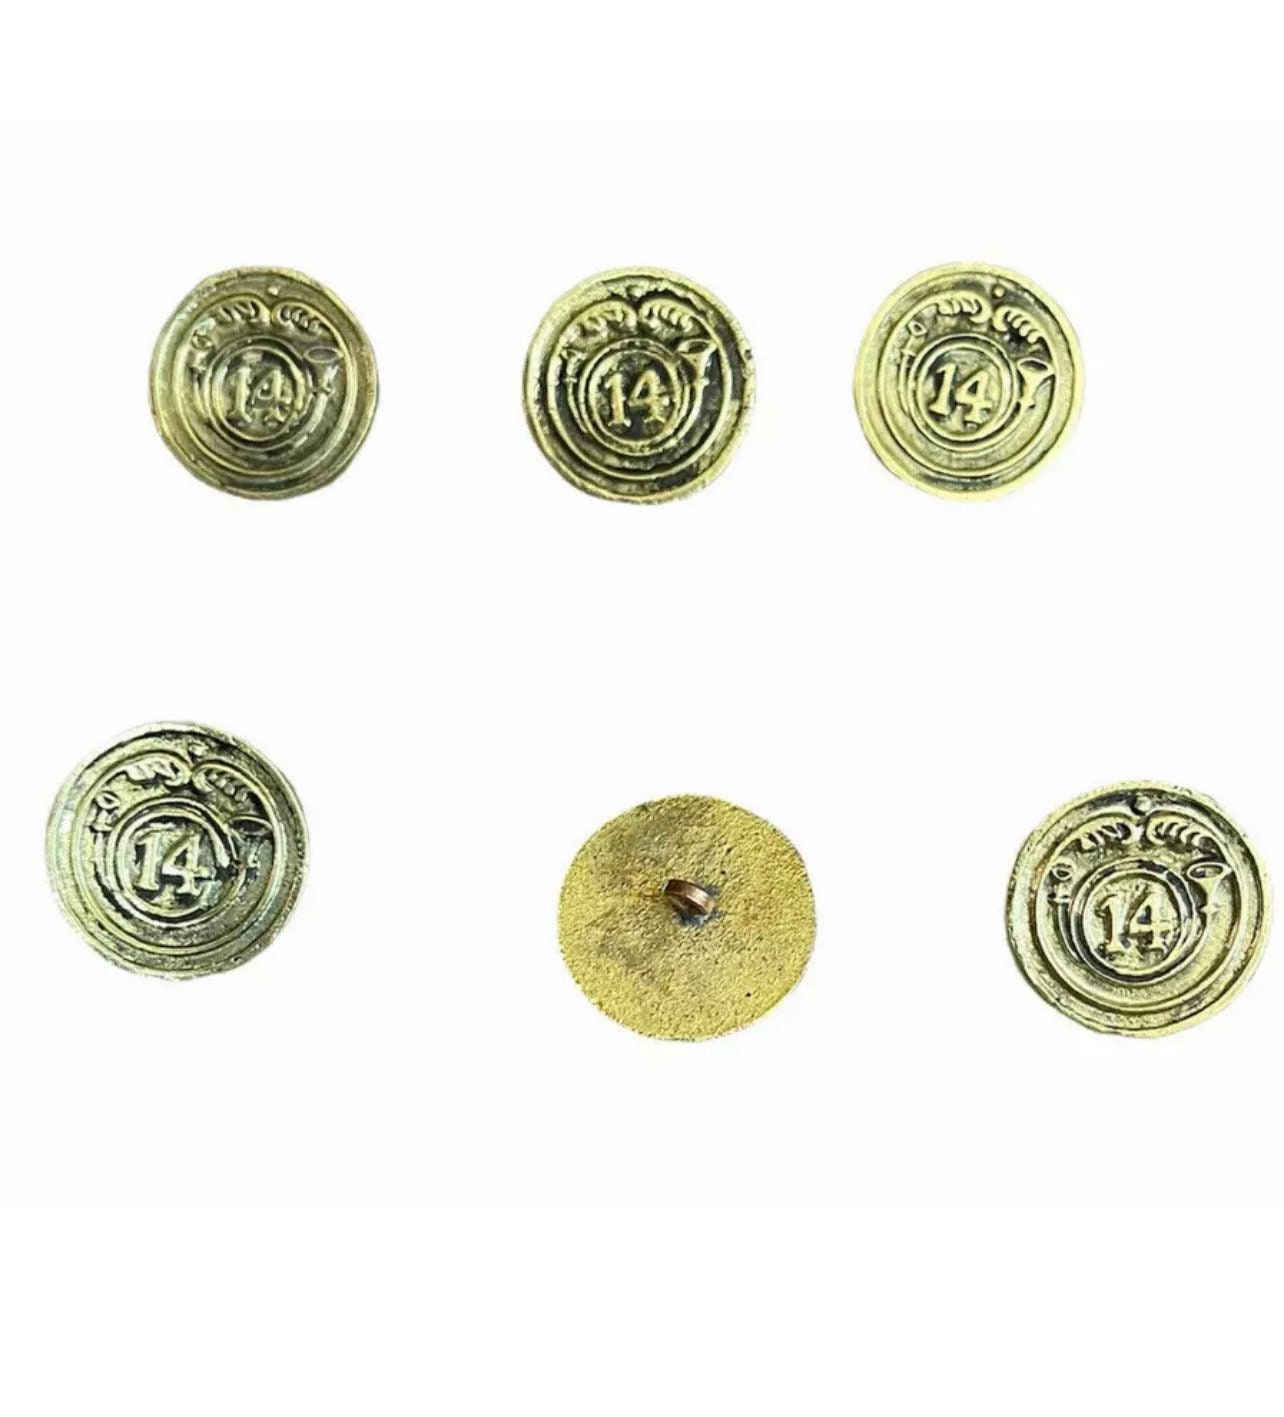 Napoleon 1er Empire/6eme Regiment Brass Buttons Size : 22mm - Etsy